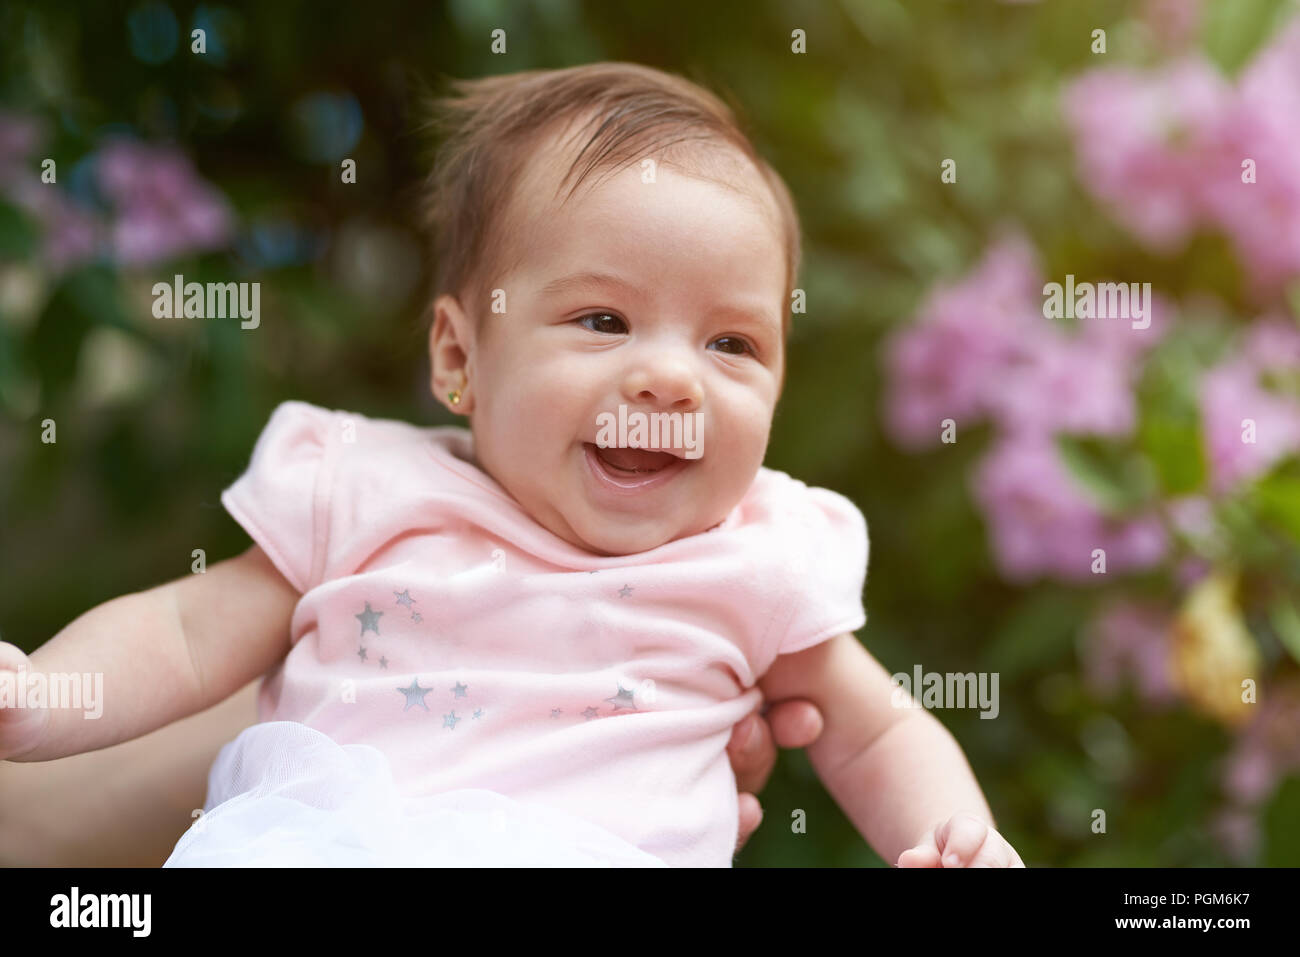 Smiling newborn baby on blurred green summer background Stock Photo